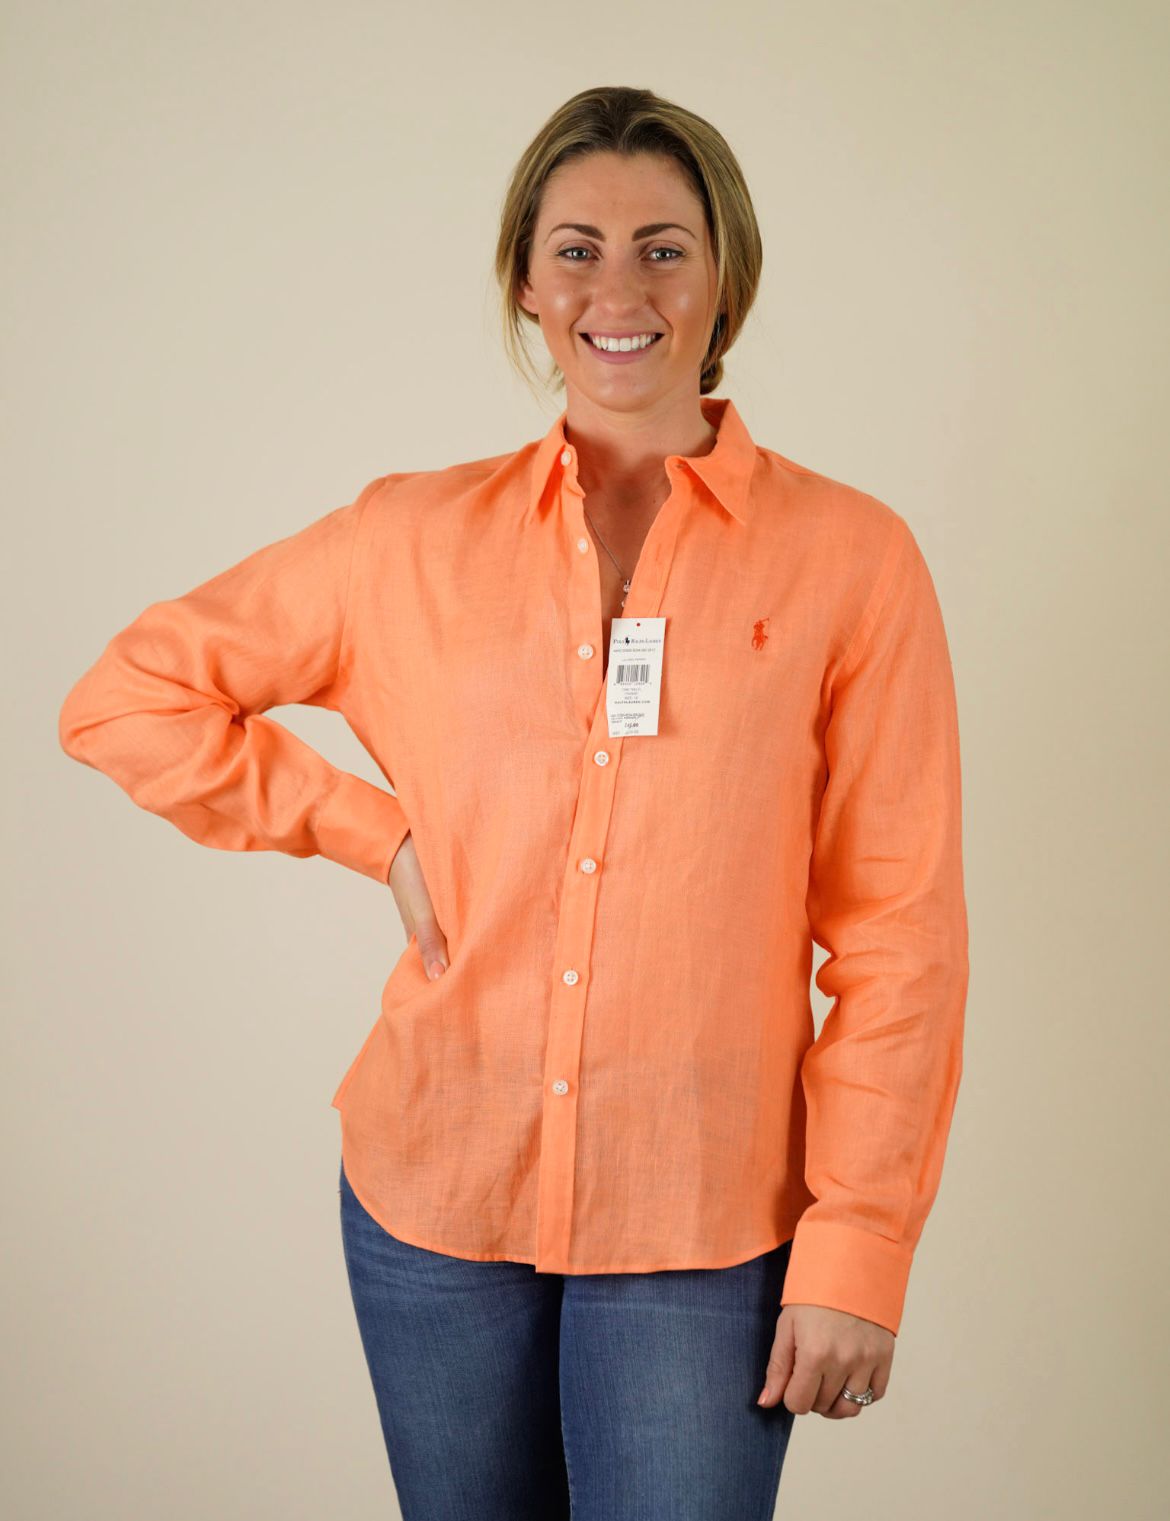 Brand new orange linen Ralph Lauren sport shirt  RTP £90